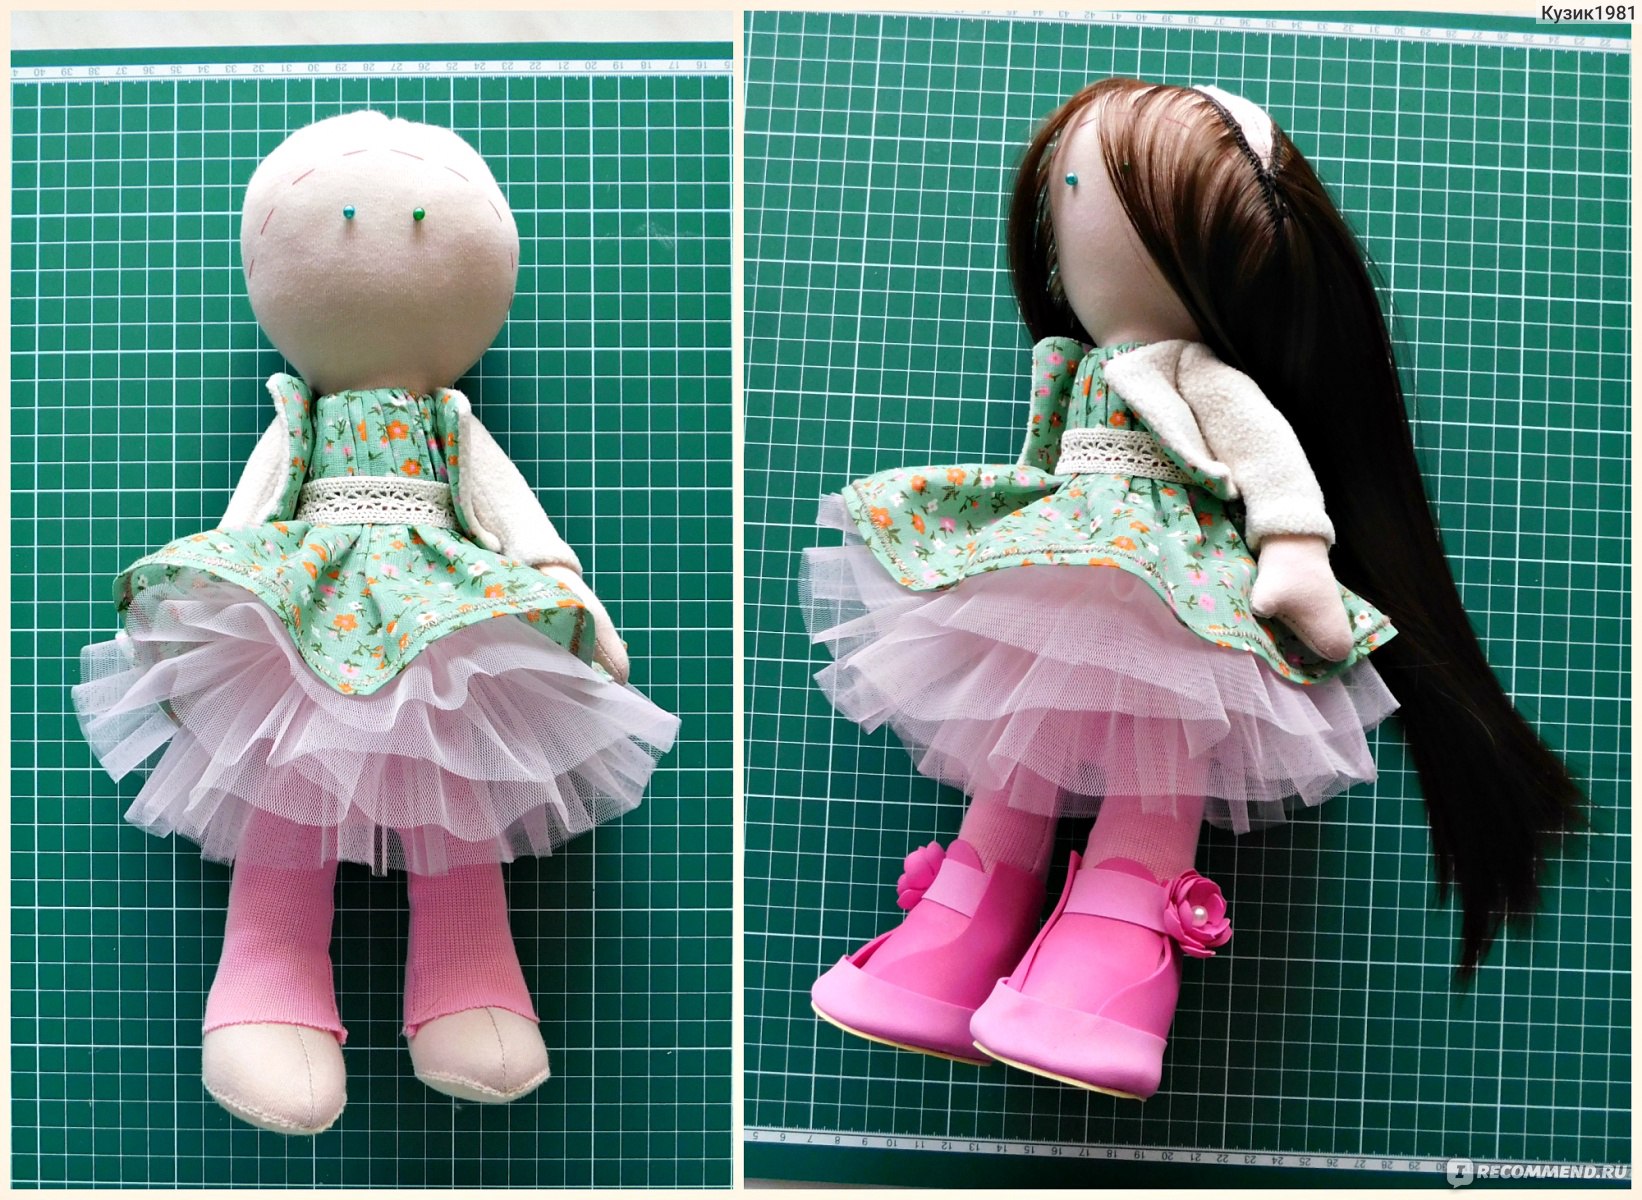 Мк платье кукле. Шитые куклы. Платье для текстильной куклы. Шитье интерьерных кукол. Кукла сшитая из ткани.